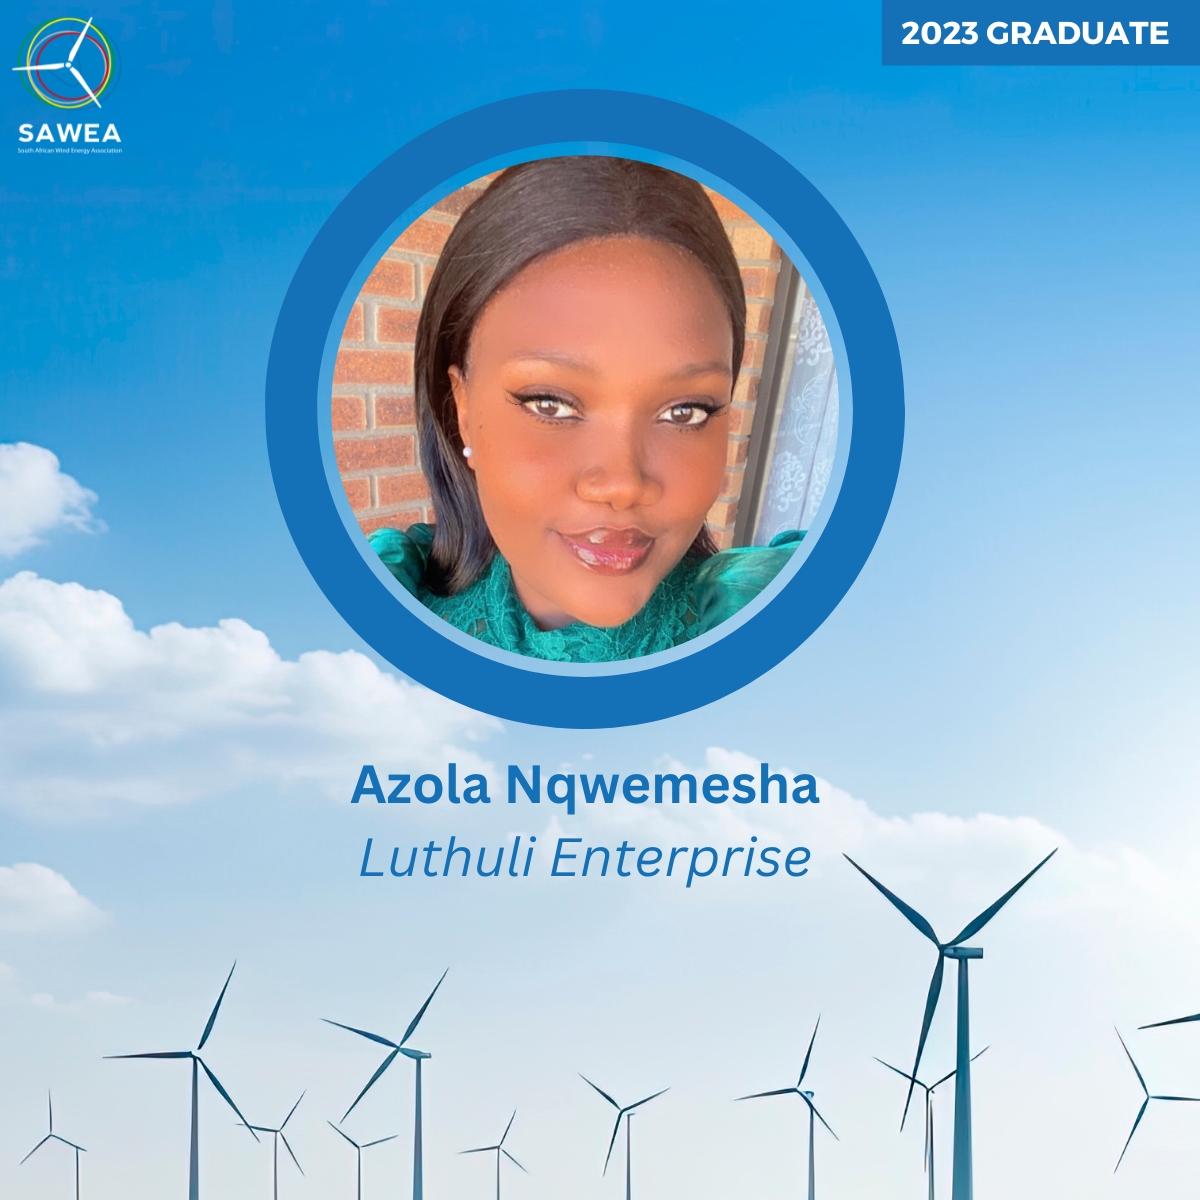 GRADUATION SEASON 👩‍🎓 Congratulations to Luthuli Enterprise's intern, Azola Nqwemesha for completing her BCom Accounting - @go2uj and PGCE - @myspu. #2023graduate #leadingwithwind #sawea